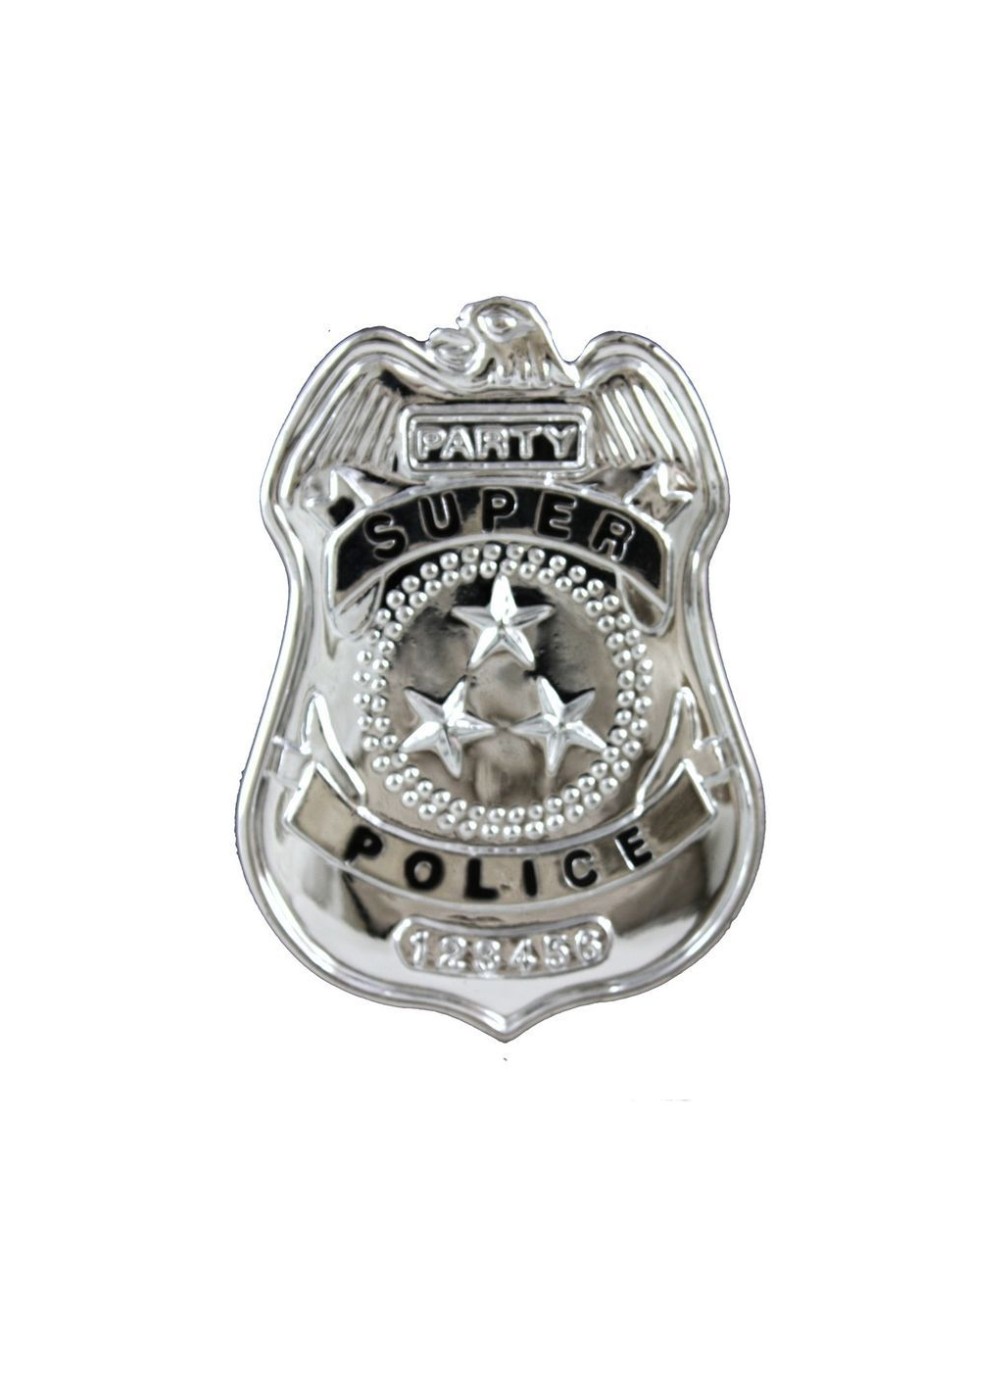 Police Boys Badge